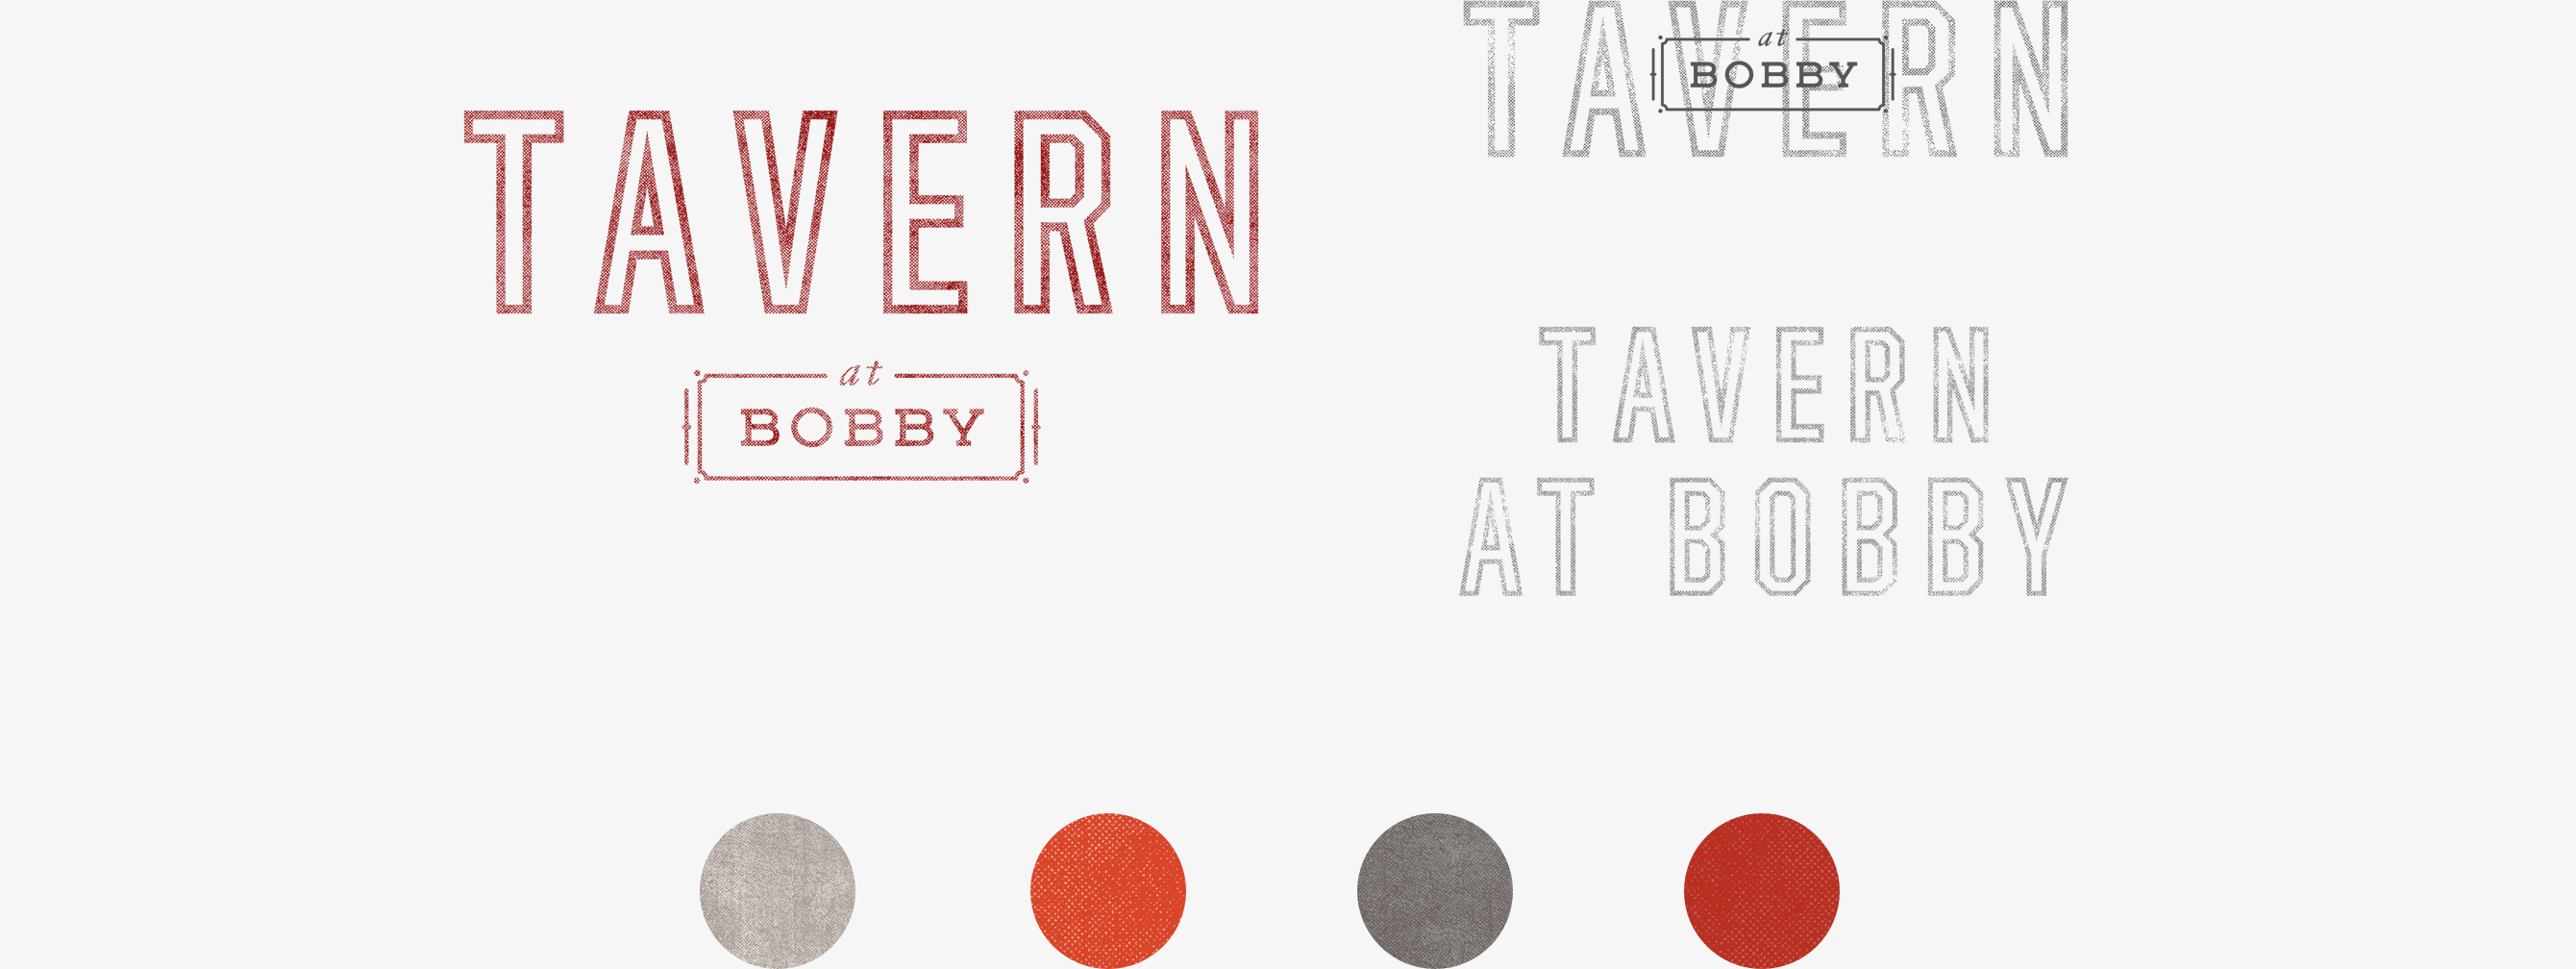 Bobby Hotel Tavern at Bobby typography logo branding and color palette in Nashville, TN